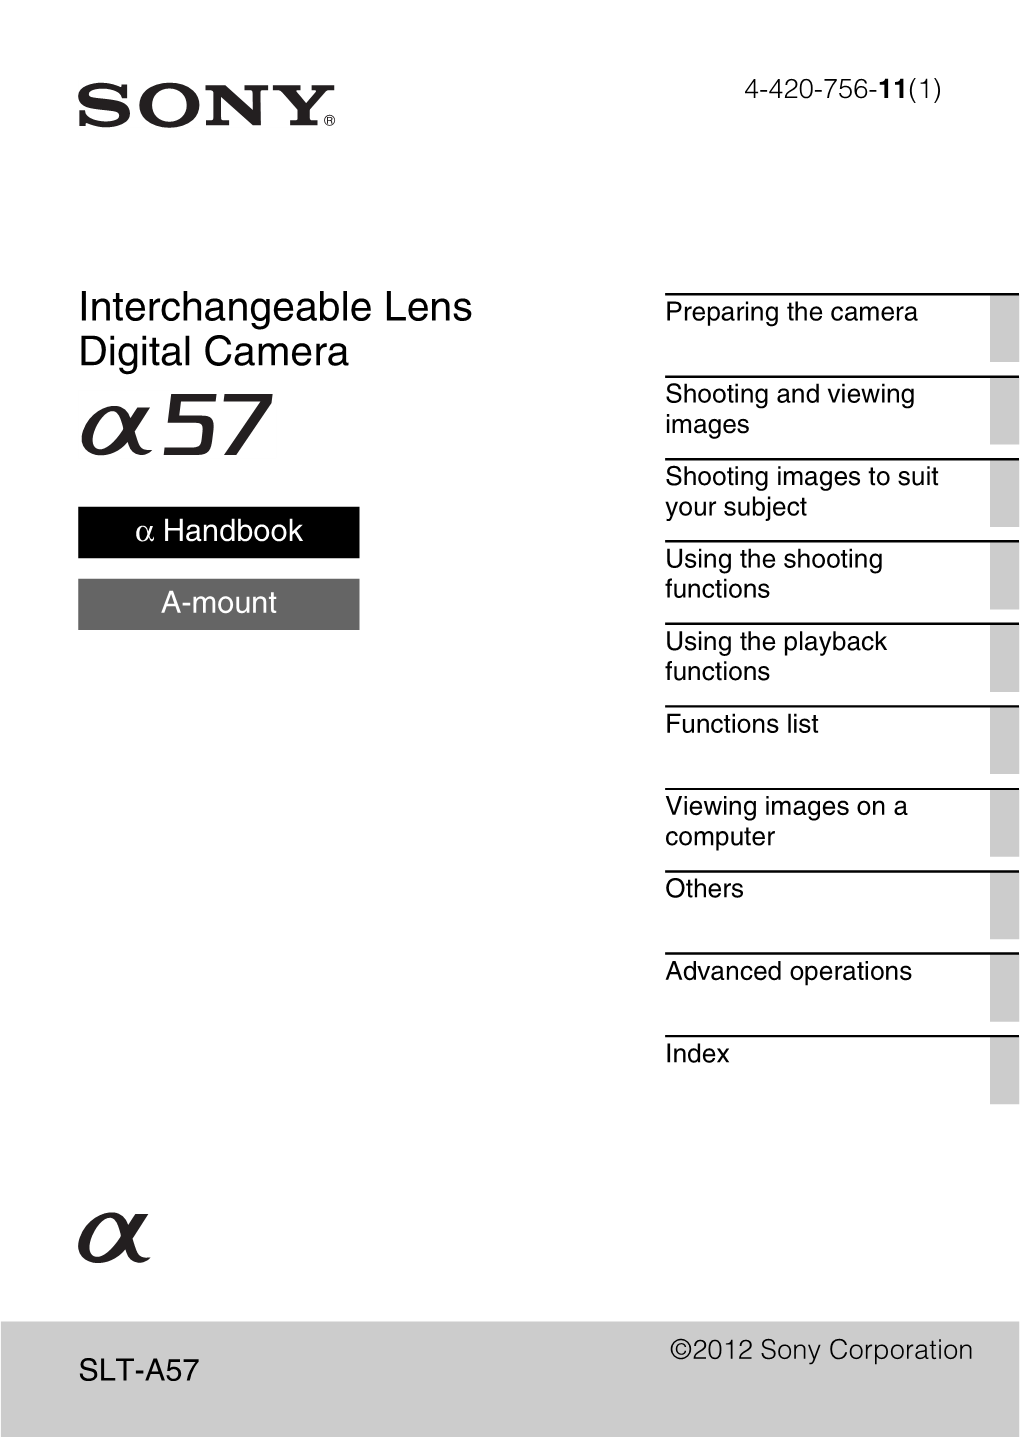 Interchangeable Lens Digital Camera